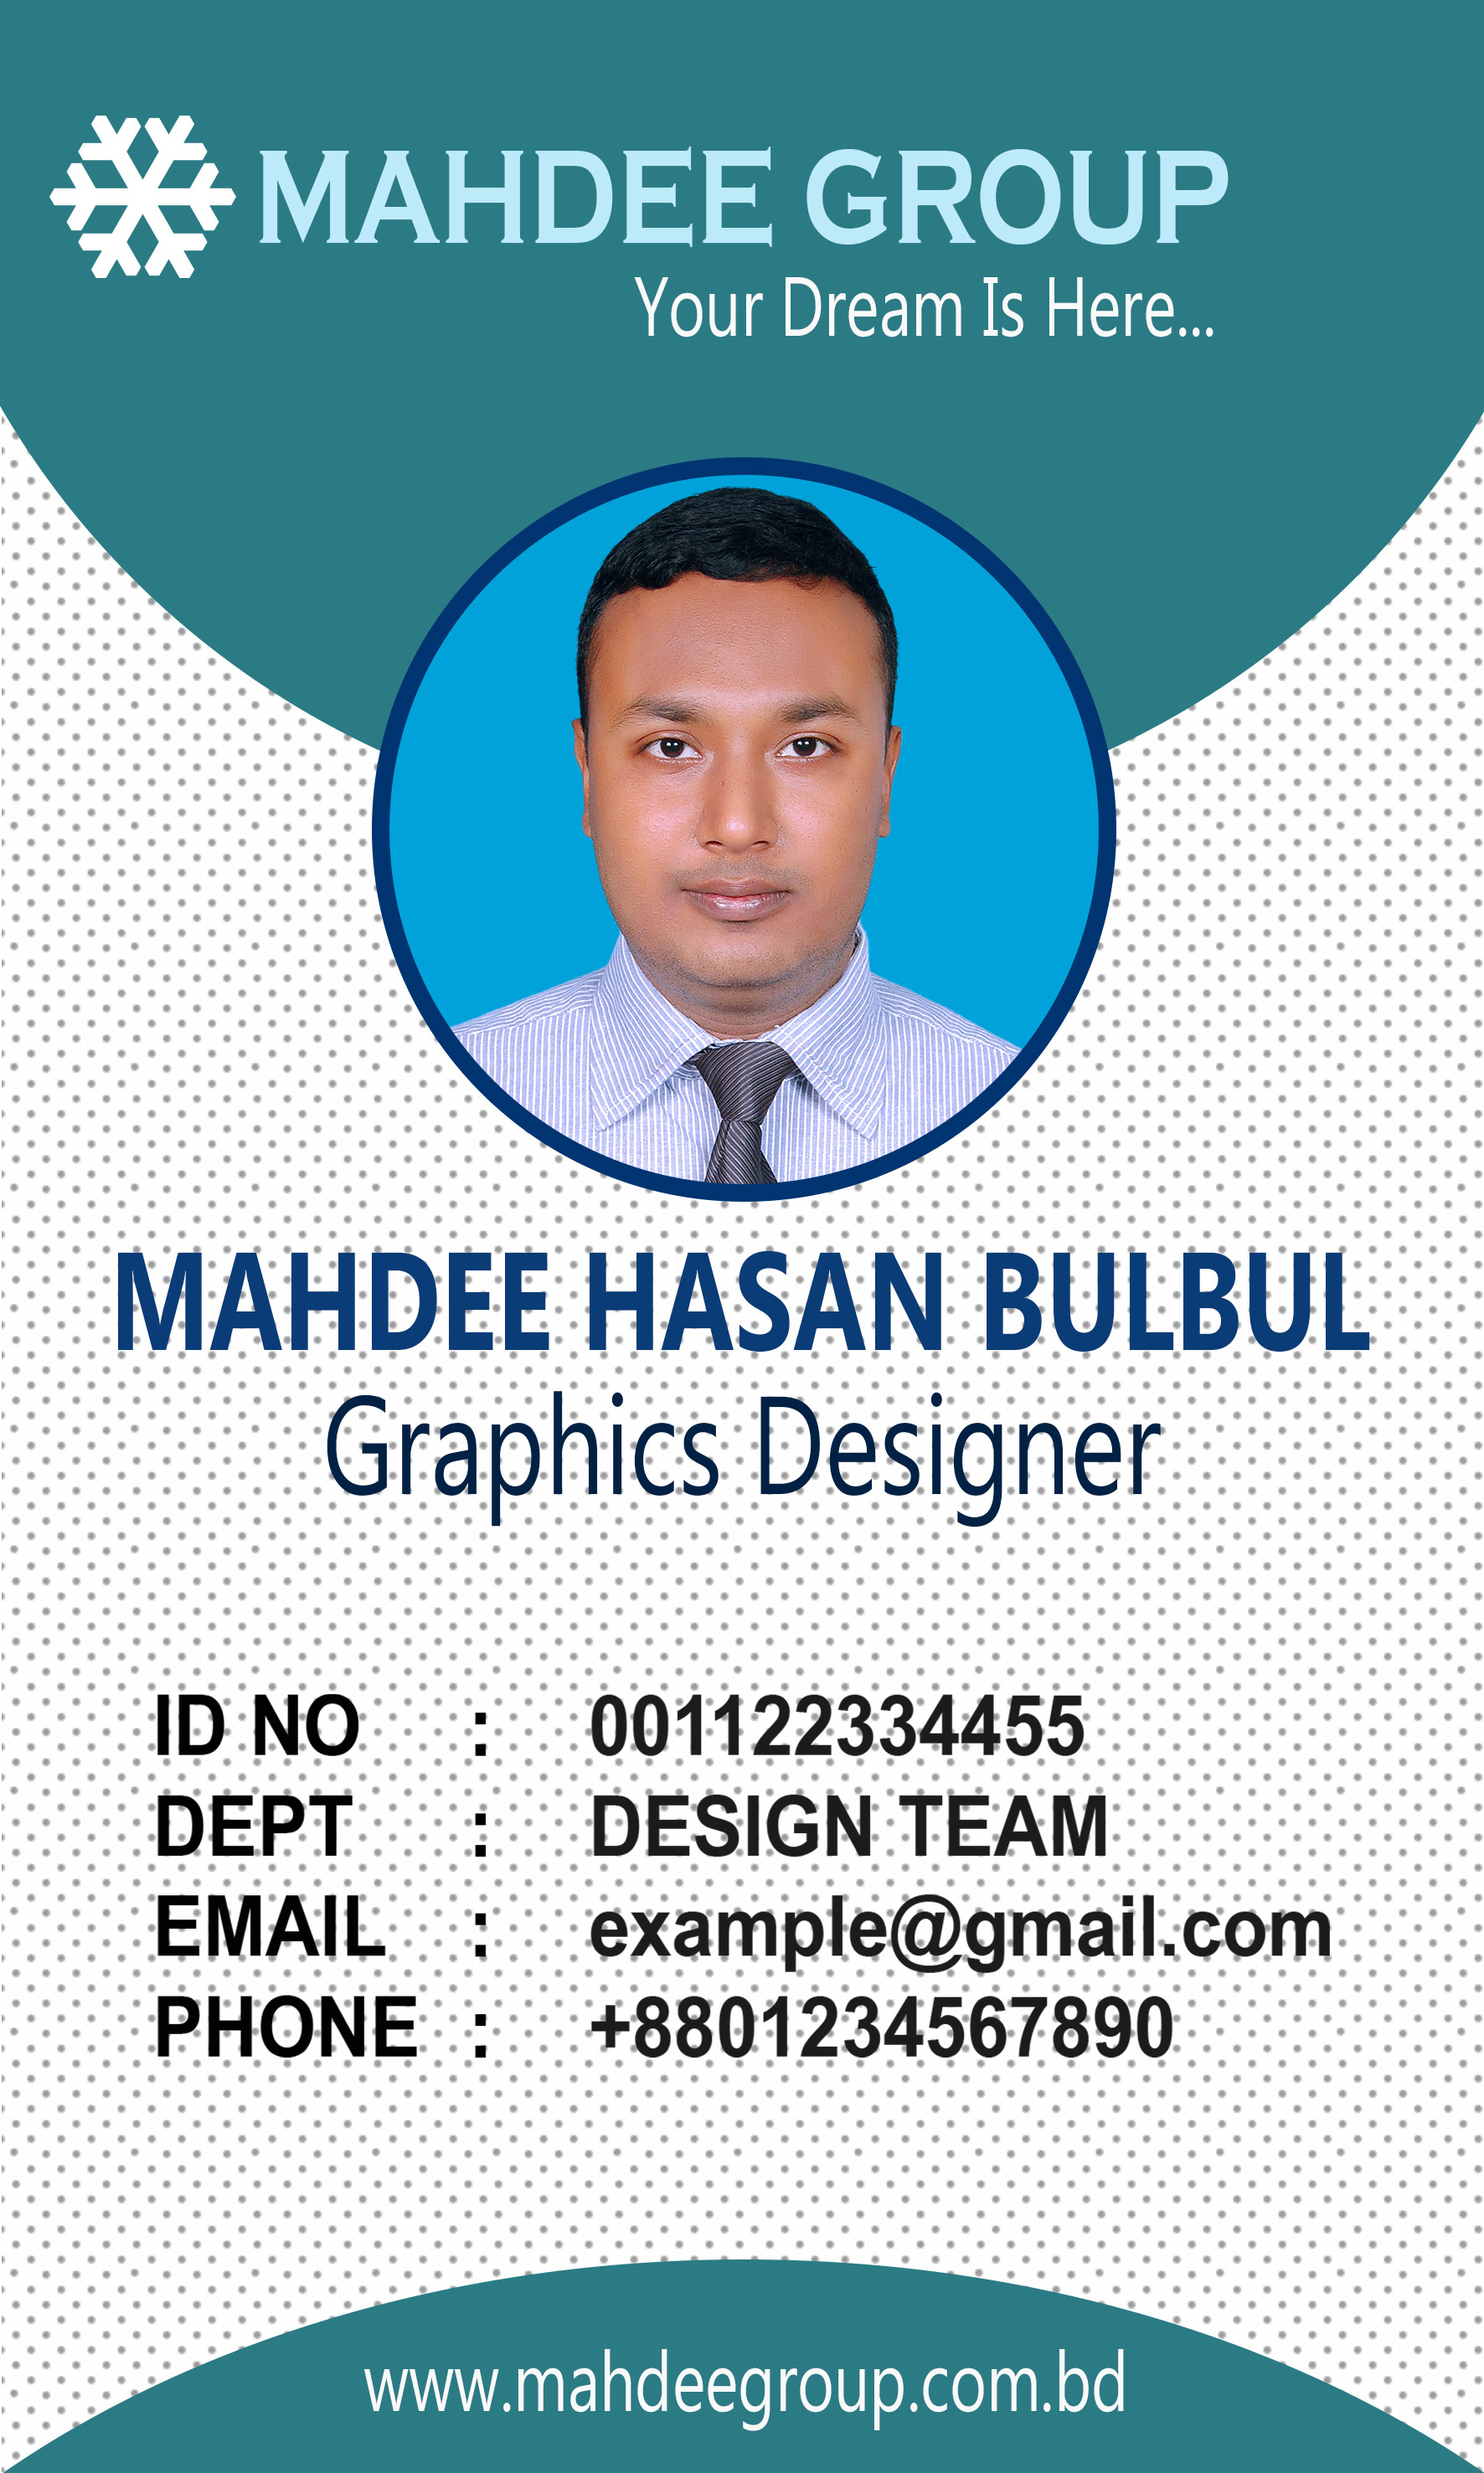 ID Card Design by Adobe Photoshop on Behance